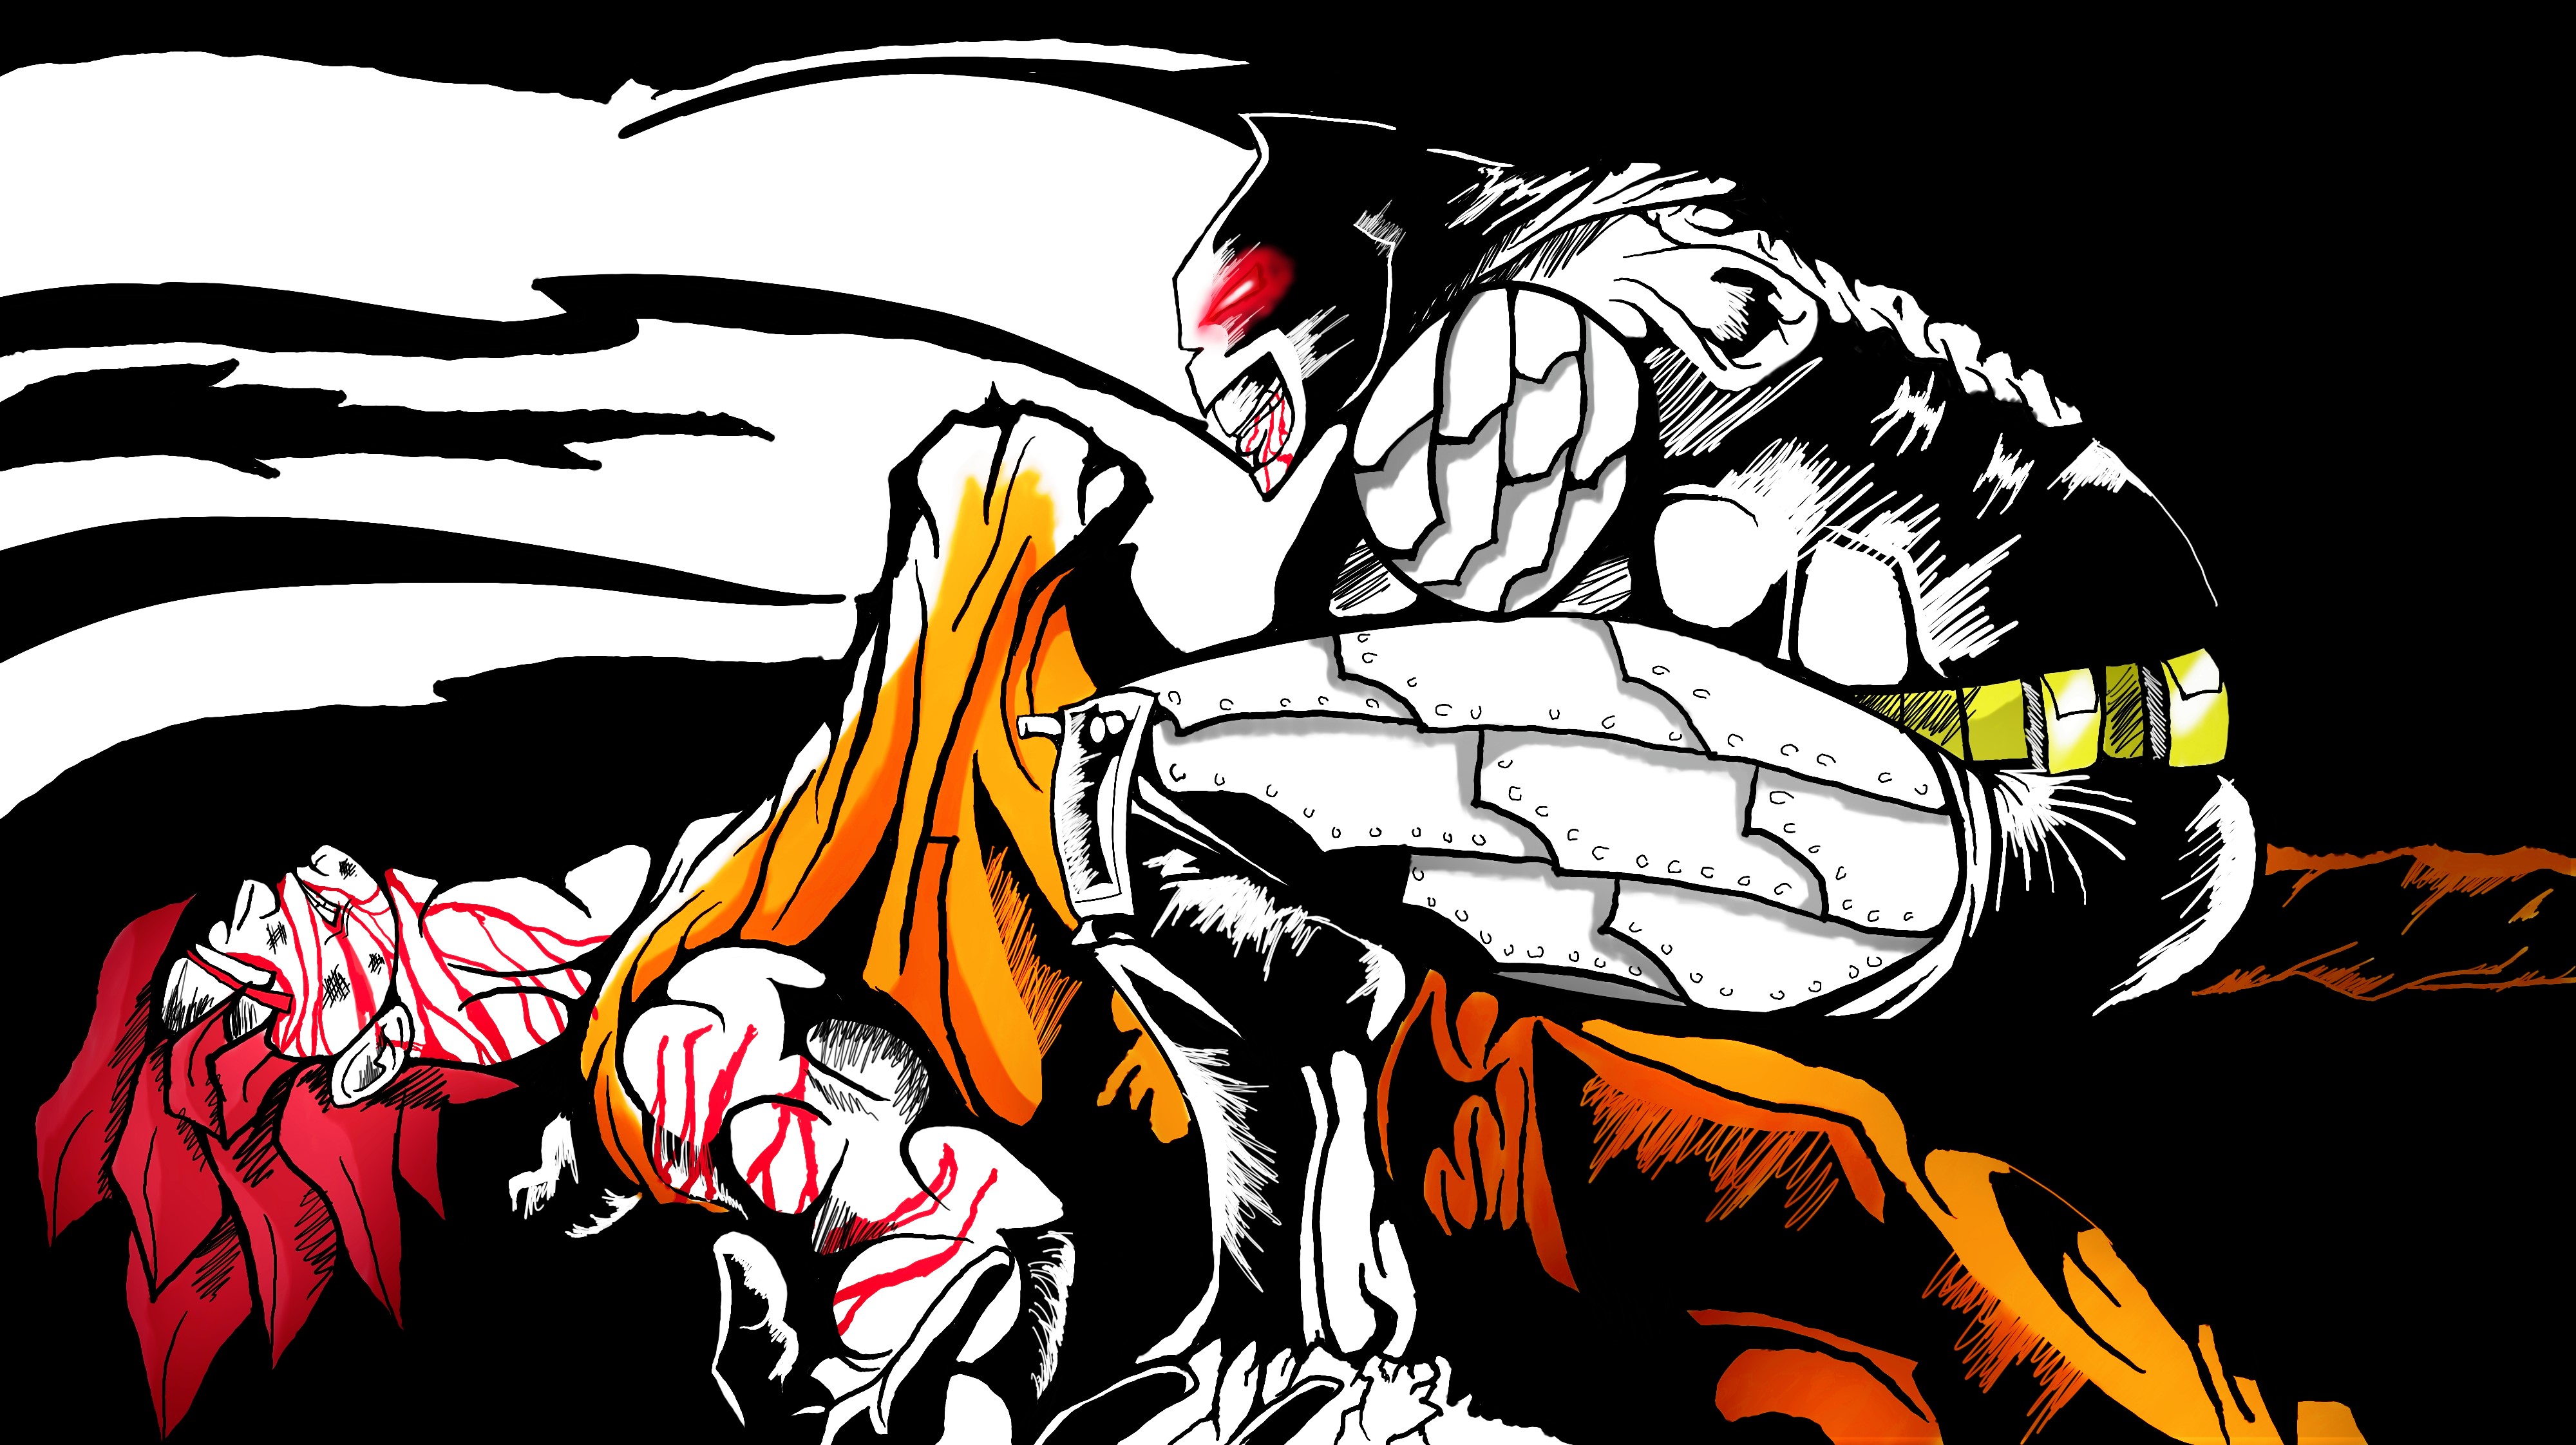 Batman vs Goku by BiggWill on DeviantArt